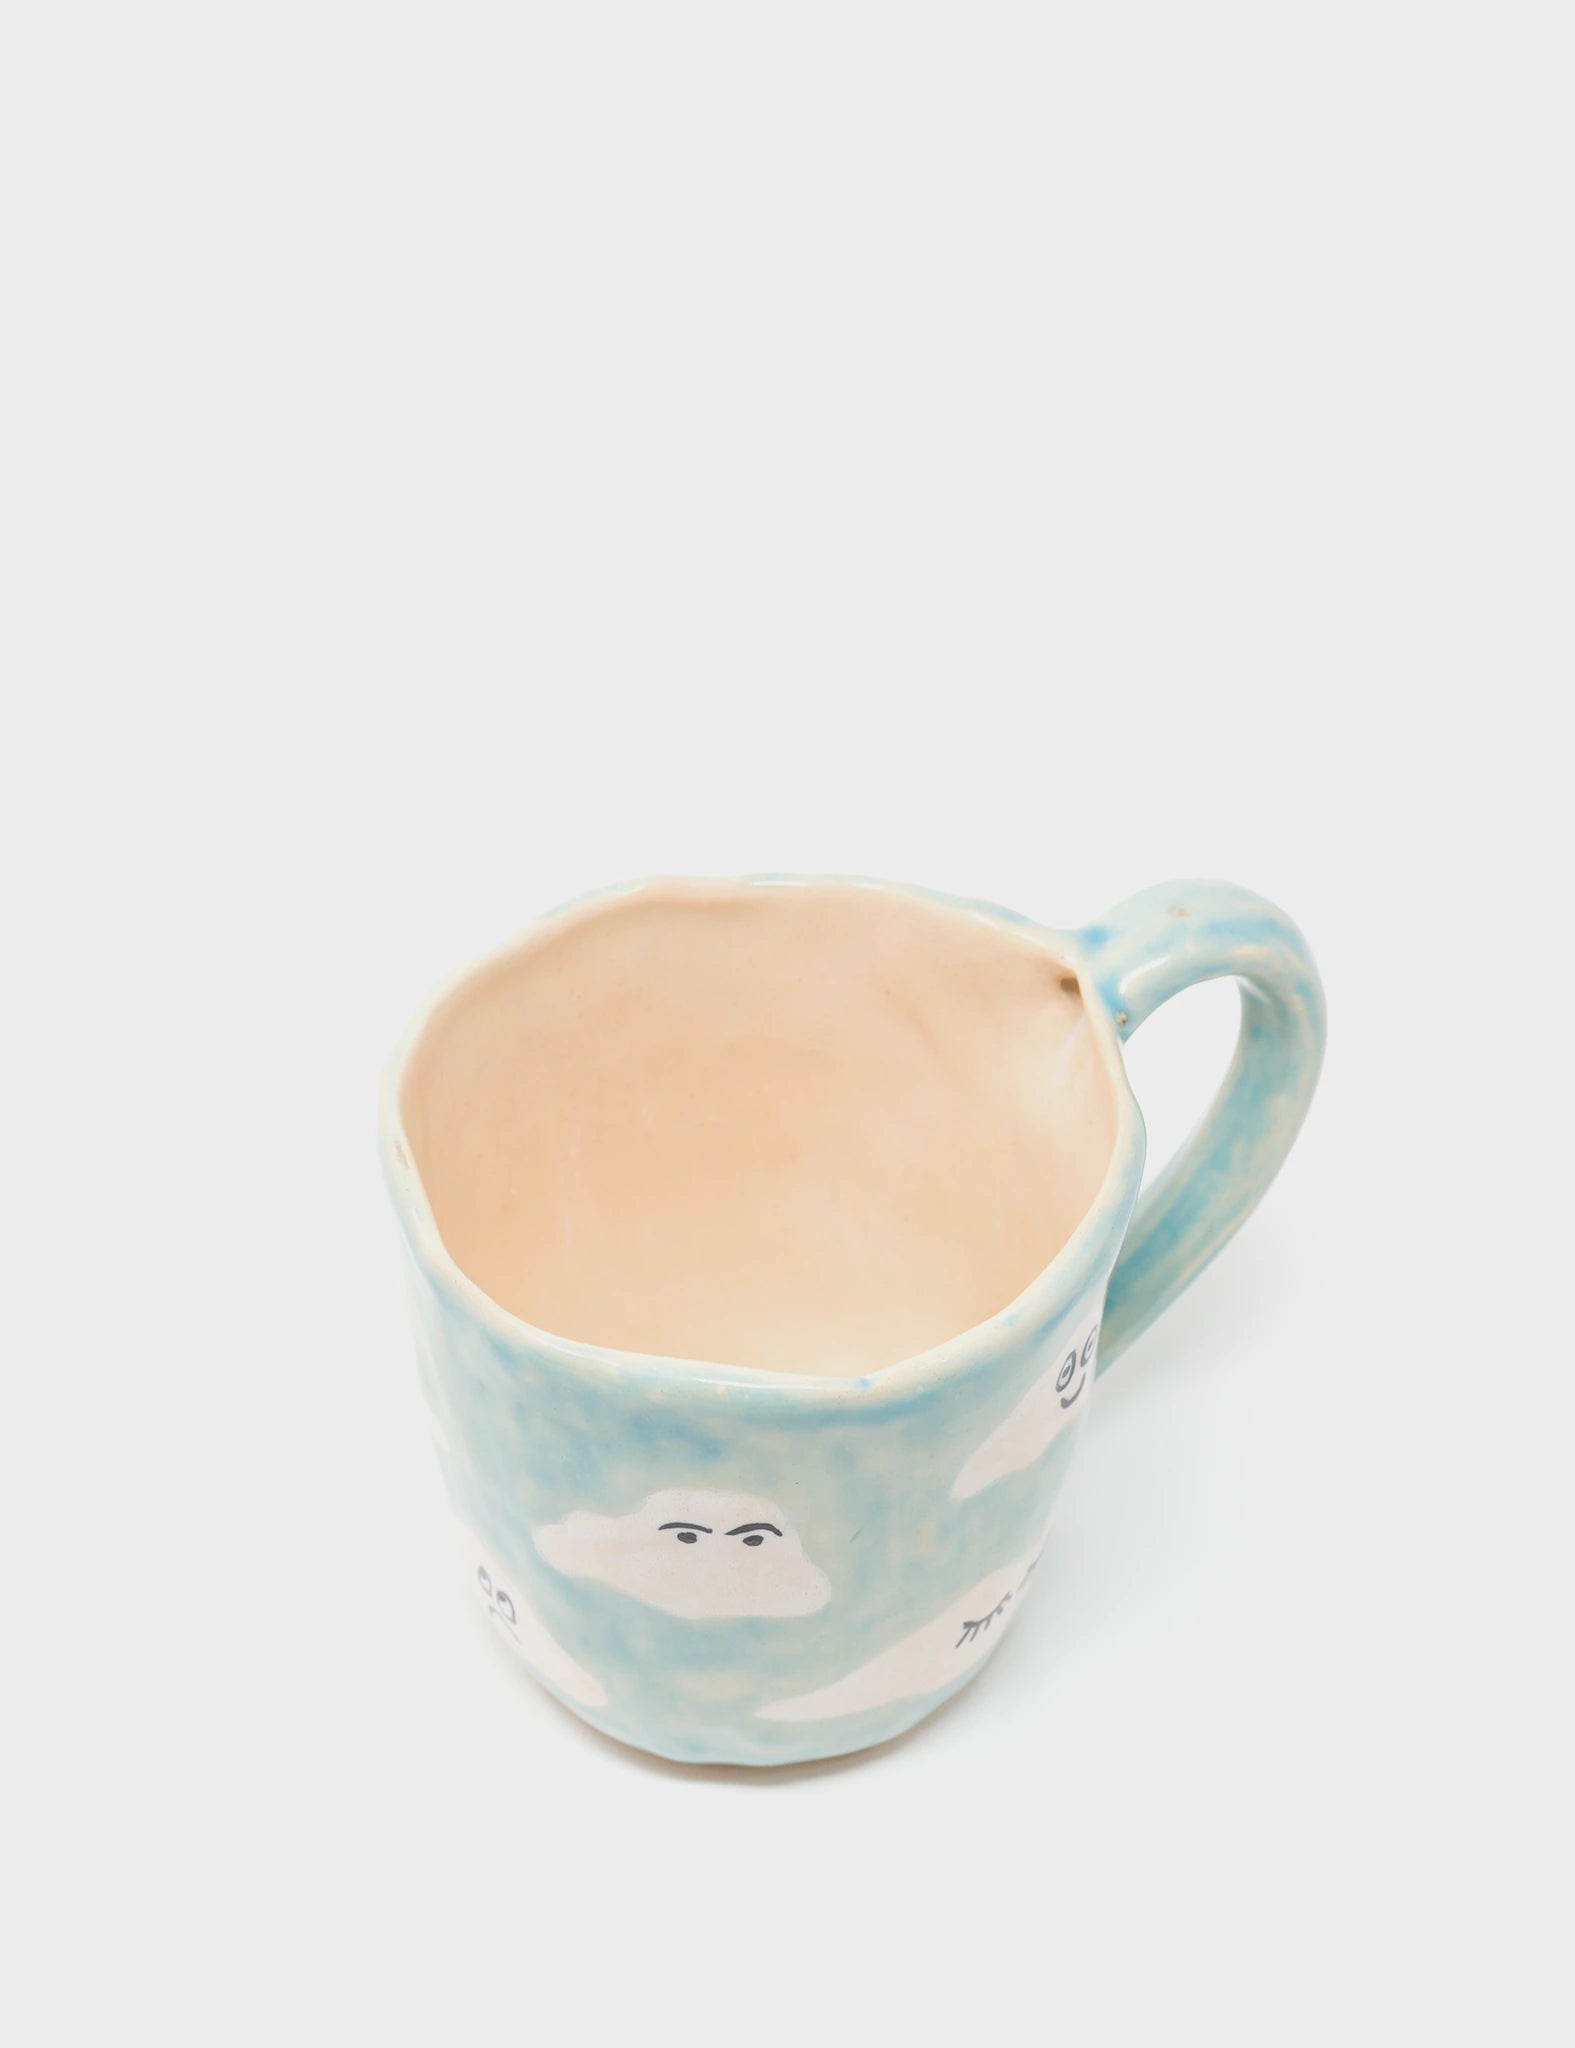 Atmospheric Attitudes - Cuttle Up Ceramic Mug - Inside